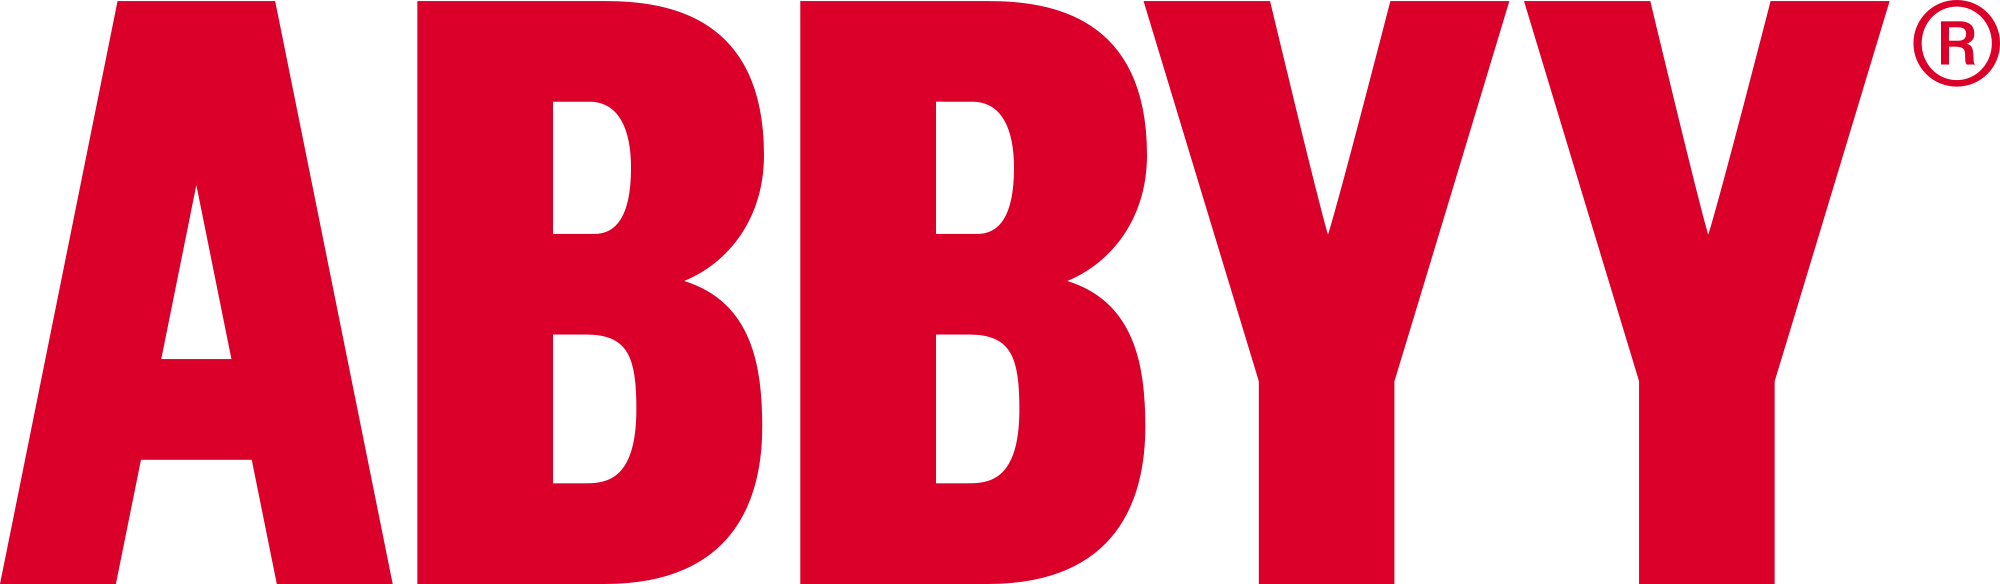 ABBYY logo.svg